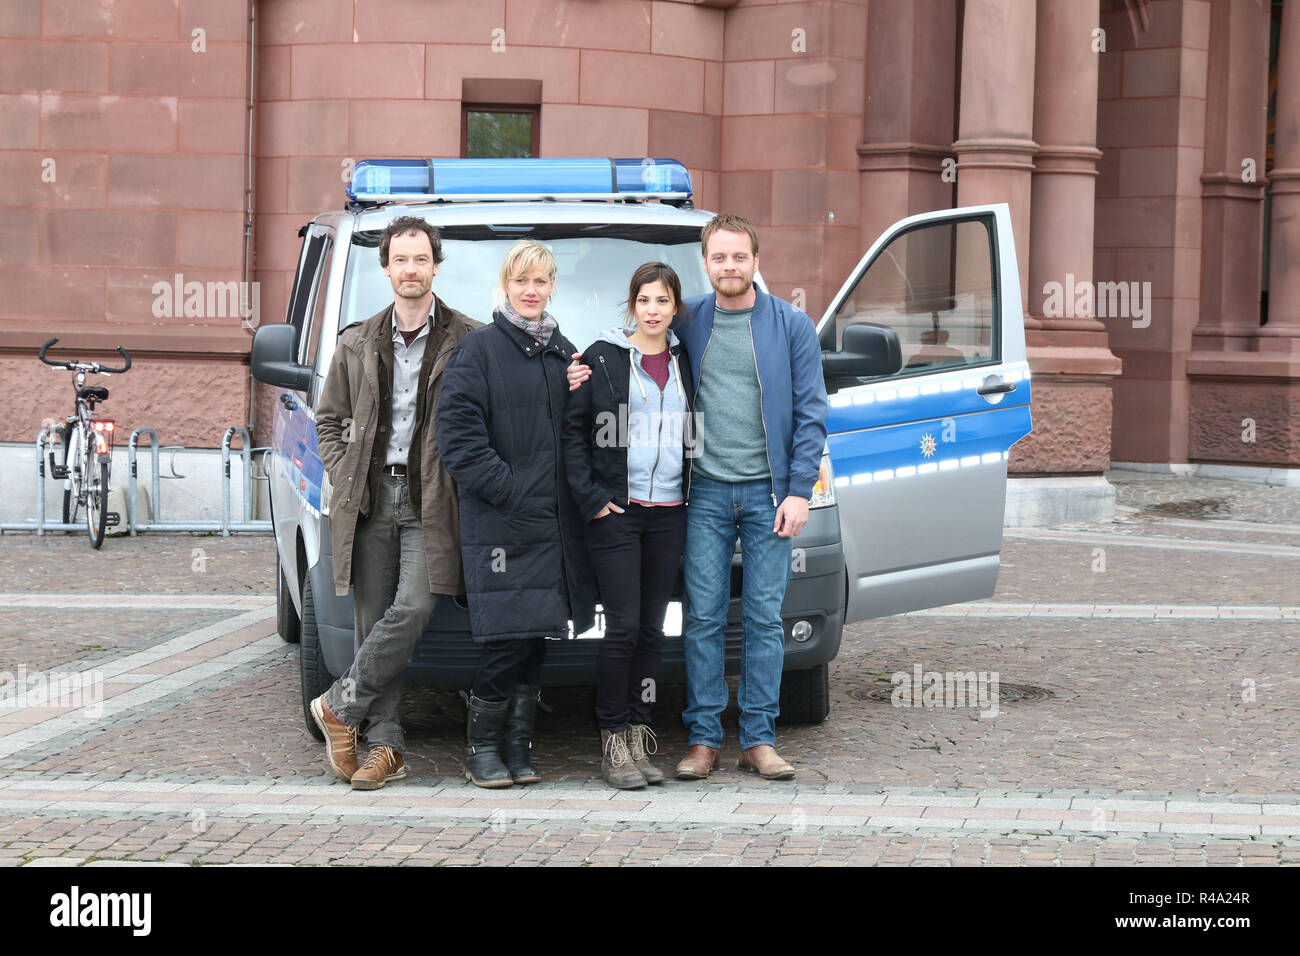 Joerg Hartmann, Anna Schudt, Aylin Tezel, Stefan Konarske, Tatort Dortmund - Sturm, Historisches Rathaus - Friedenplatz, Dortmund, 25.04.2016 Stock Photo